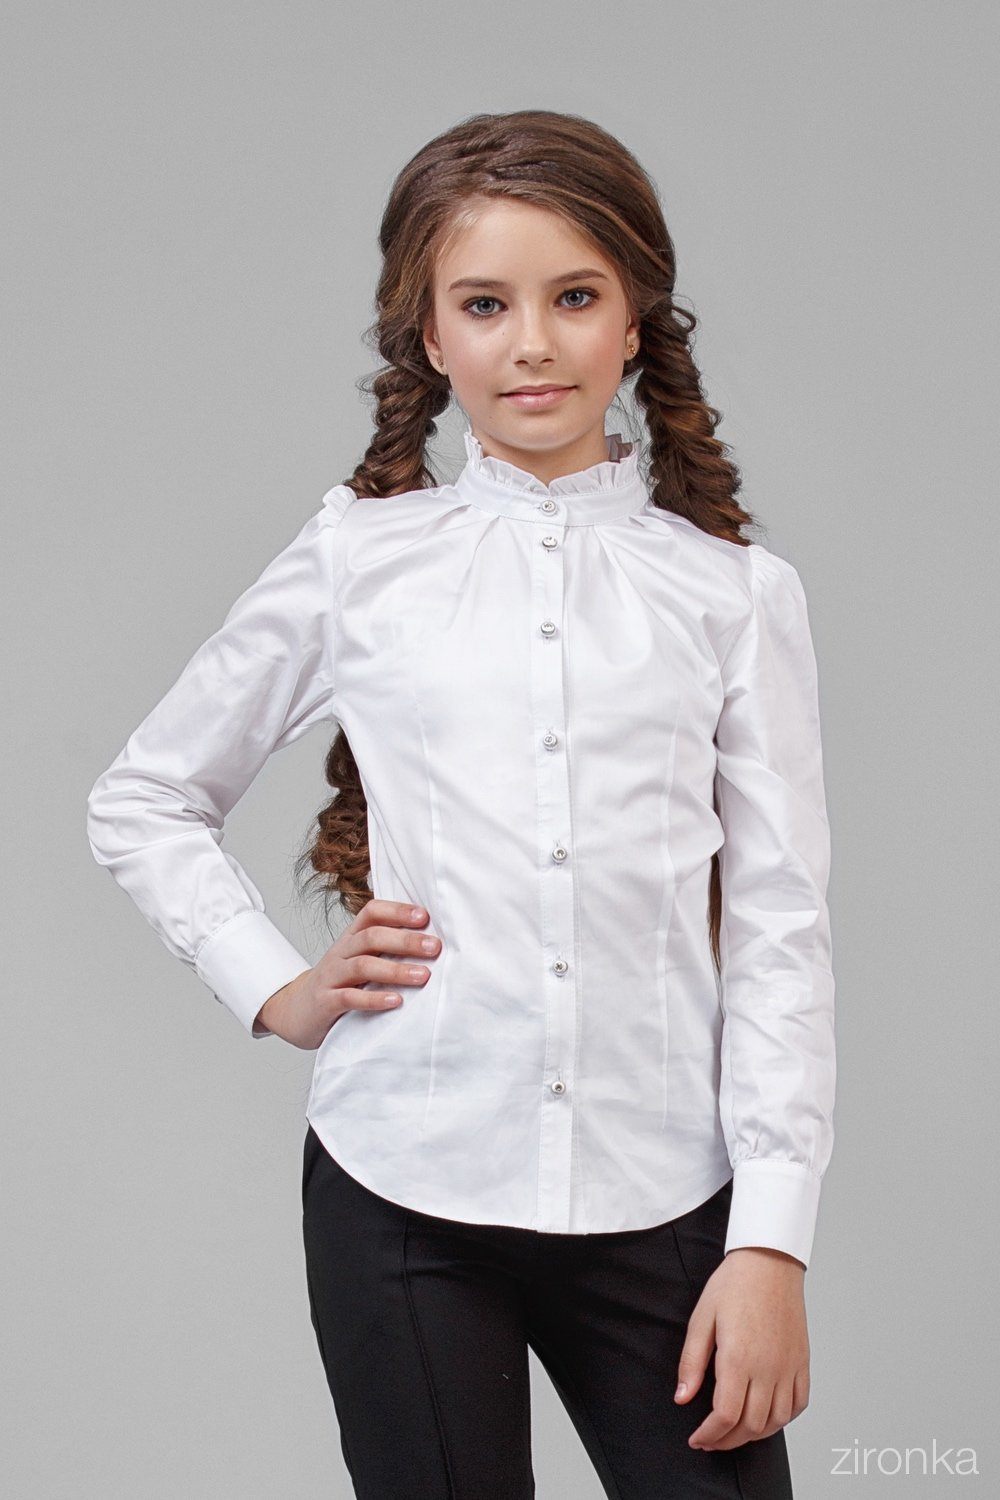 Форма блузка. Школьная блузка. Блузка Школьная для девочек. Белая блузка для девочки. Белые блузки для девочек в школу.